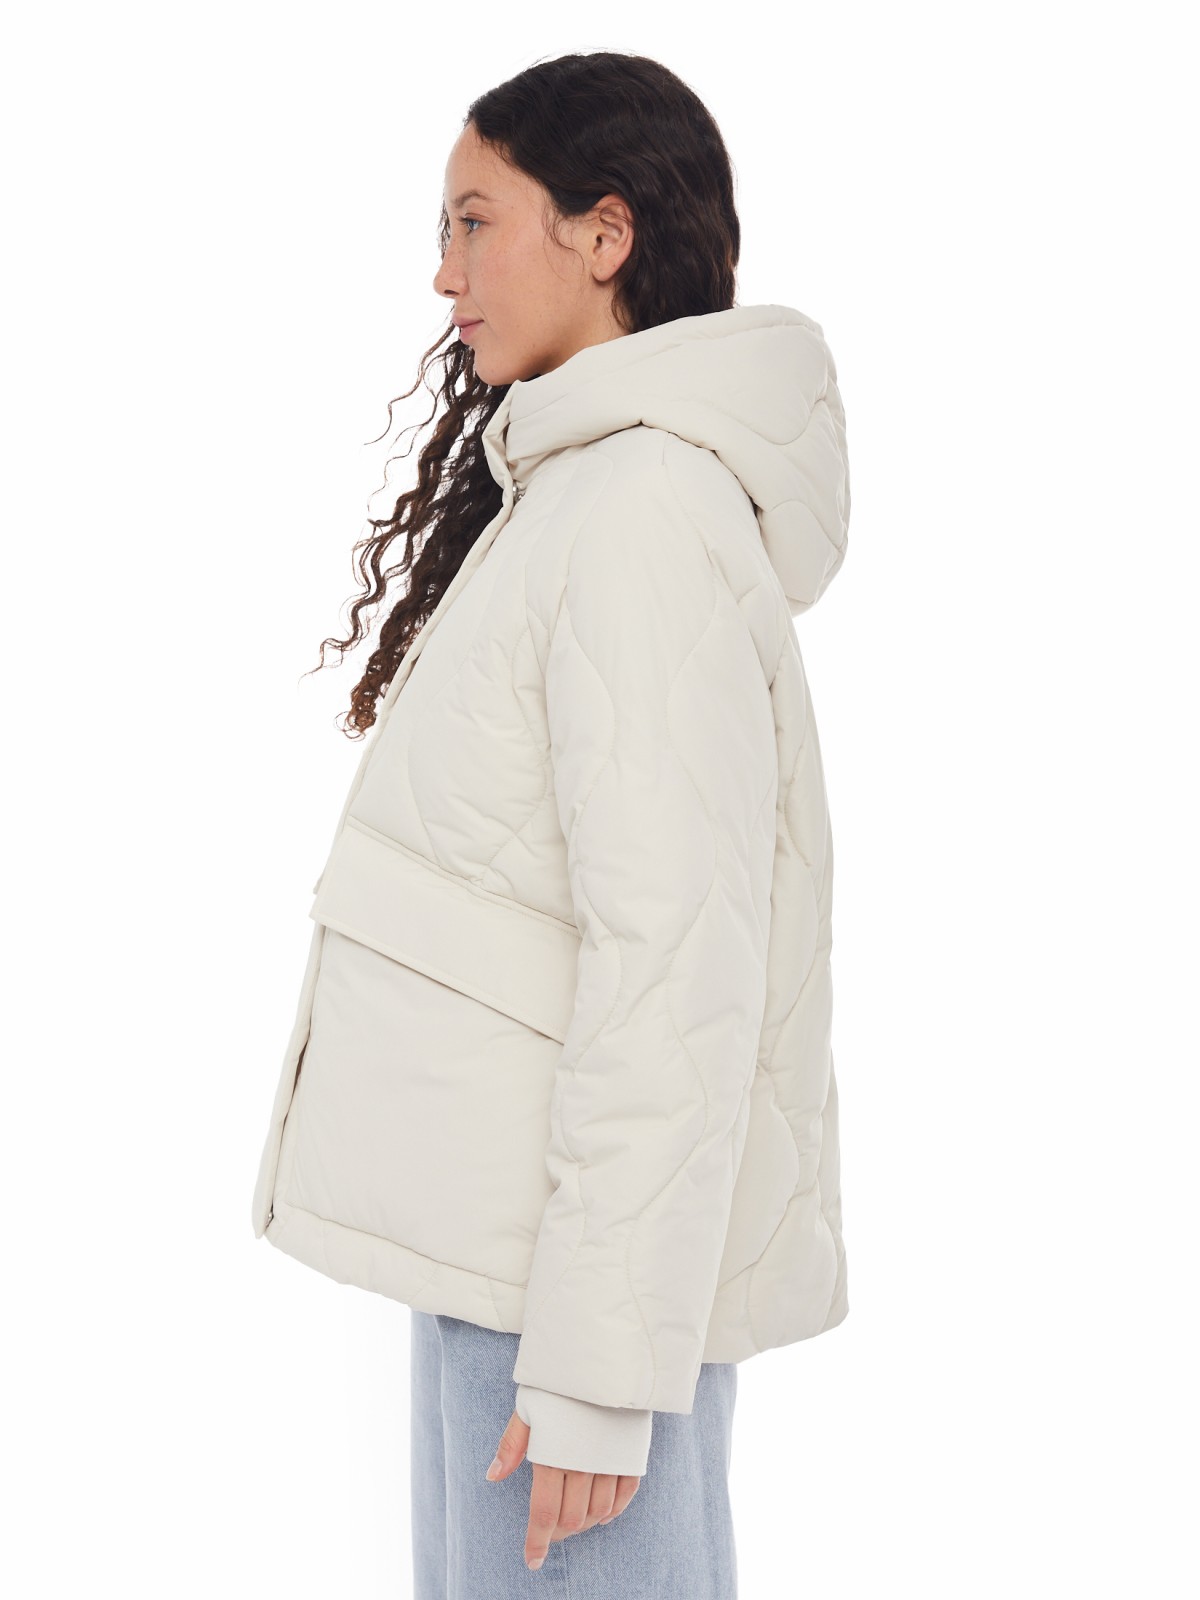 Тёплая дутая куртка оверсайз силуэта с капюшоном zolla 024125112424, цвет молоко, размер XS - фото 3